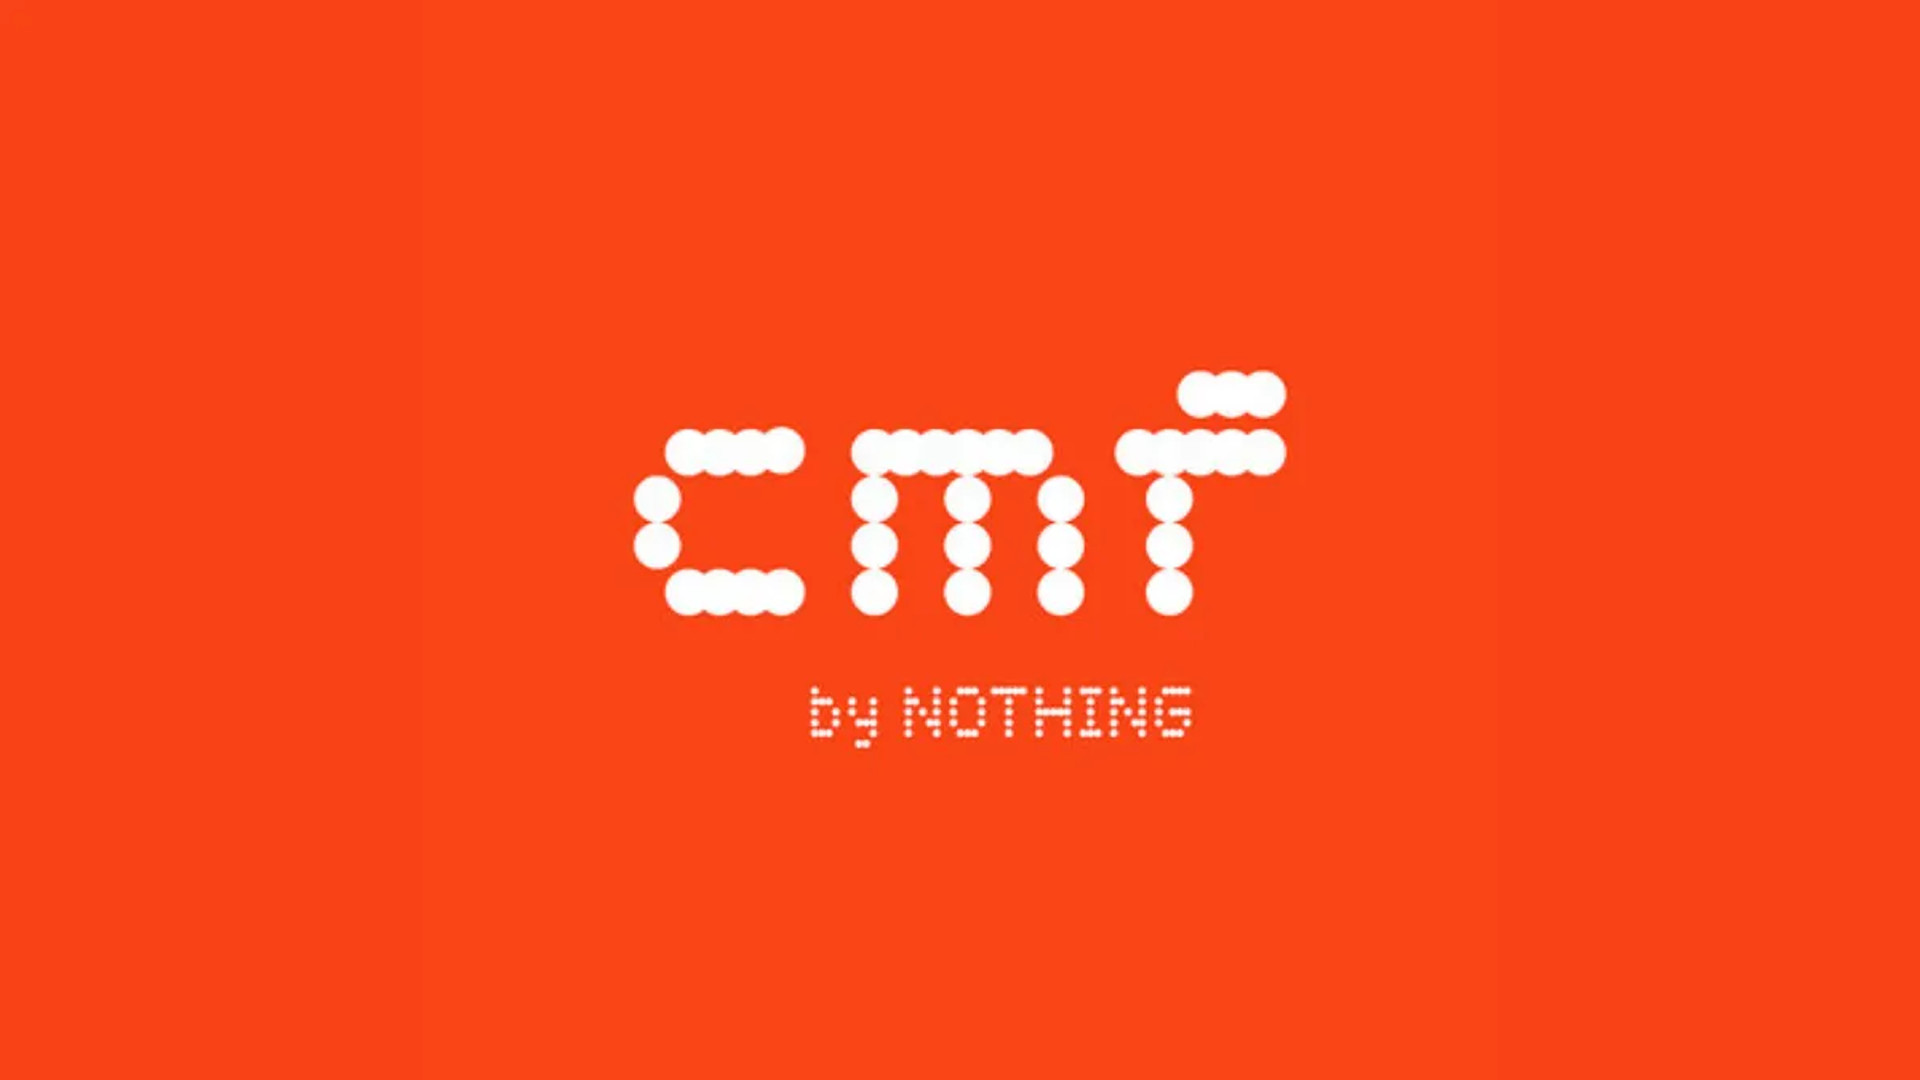 logo CMF by Nothing